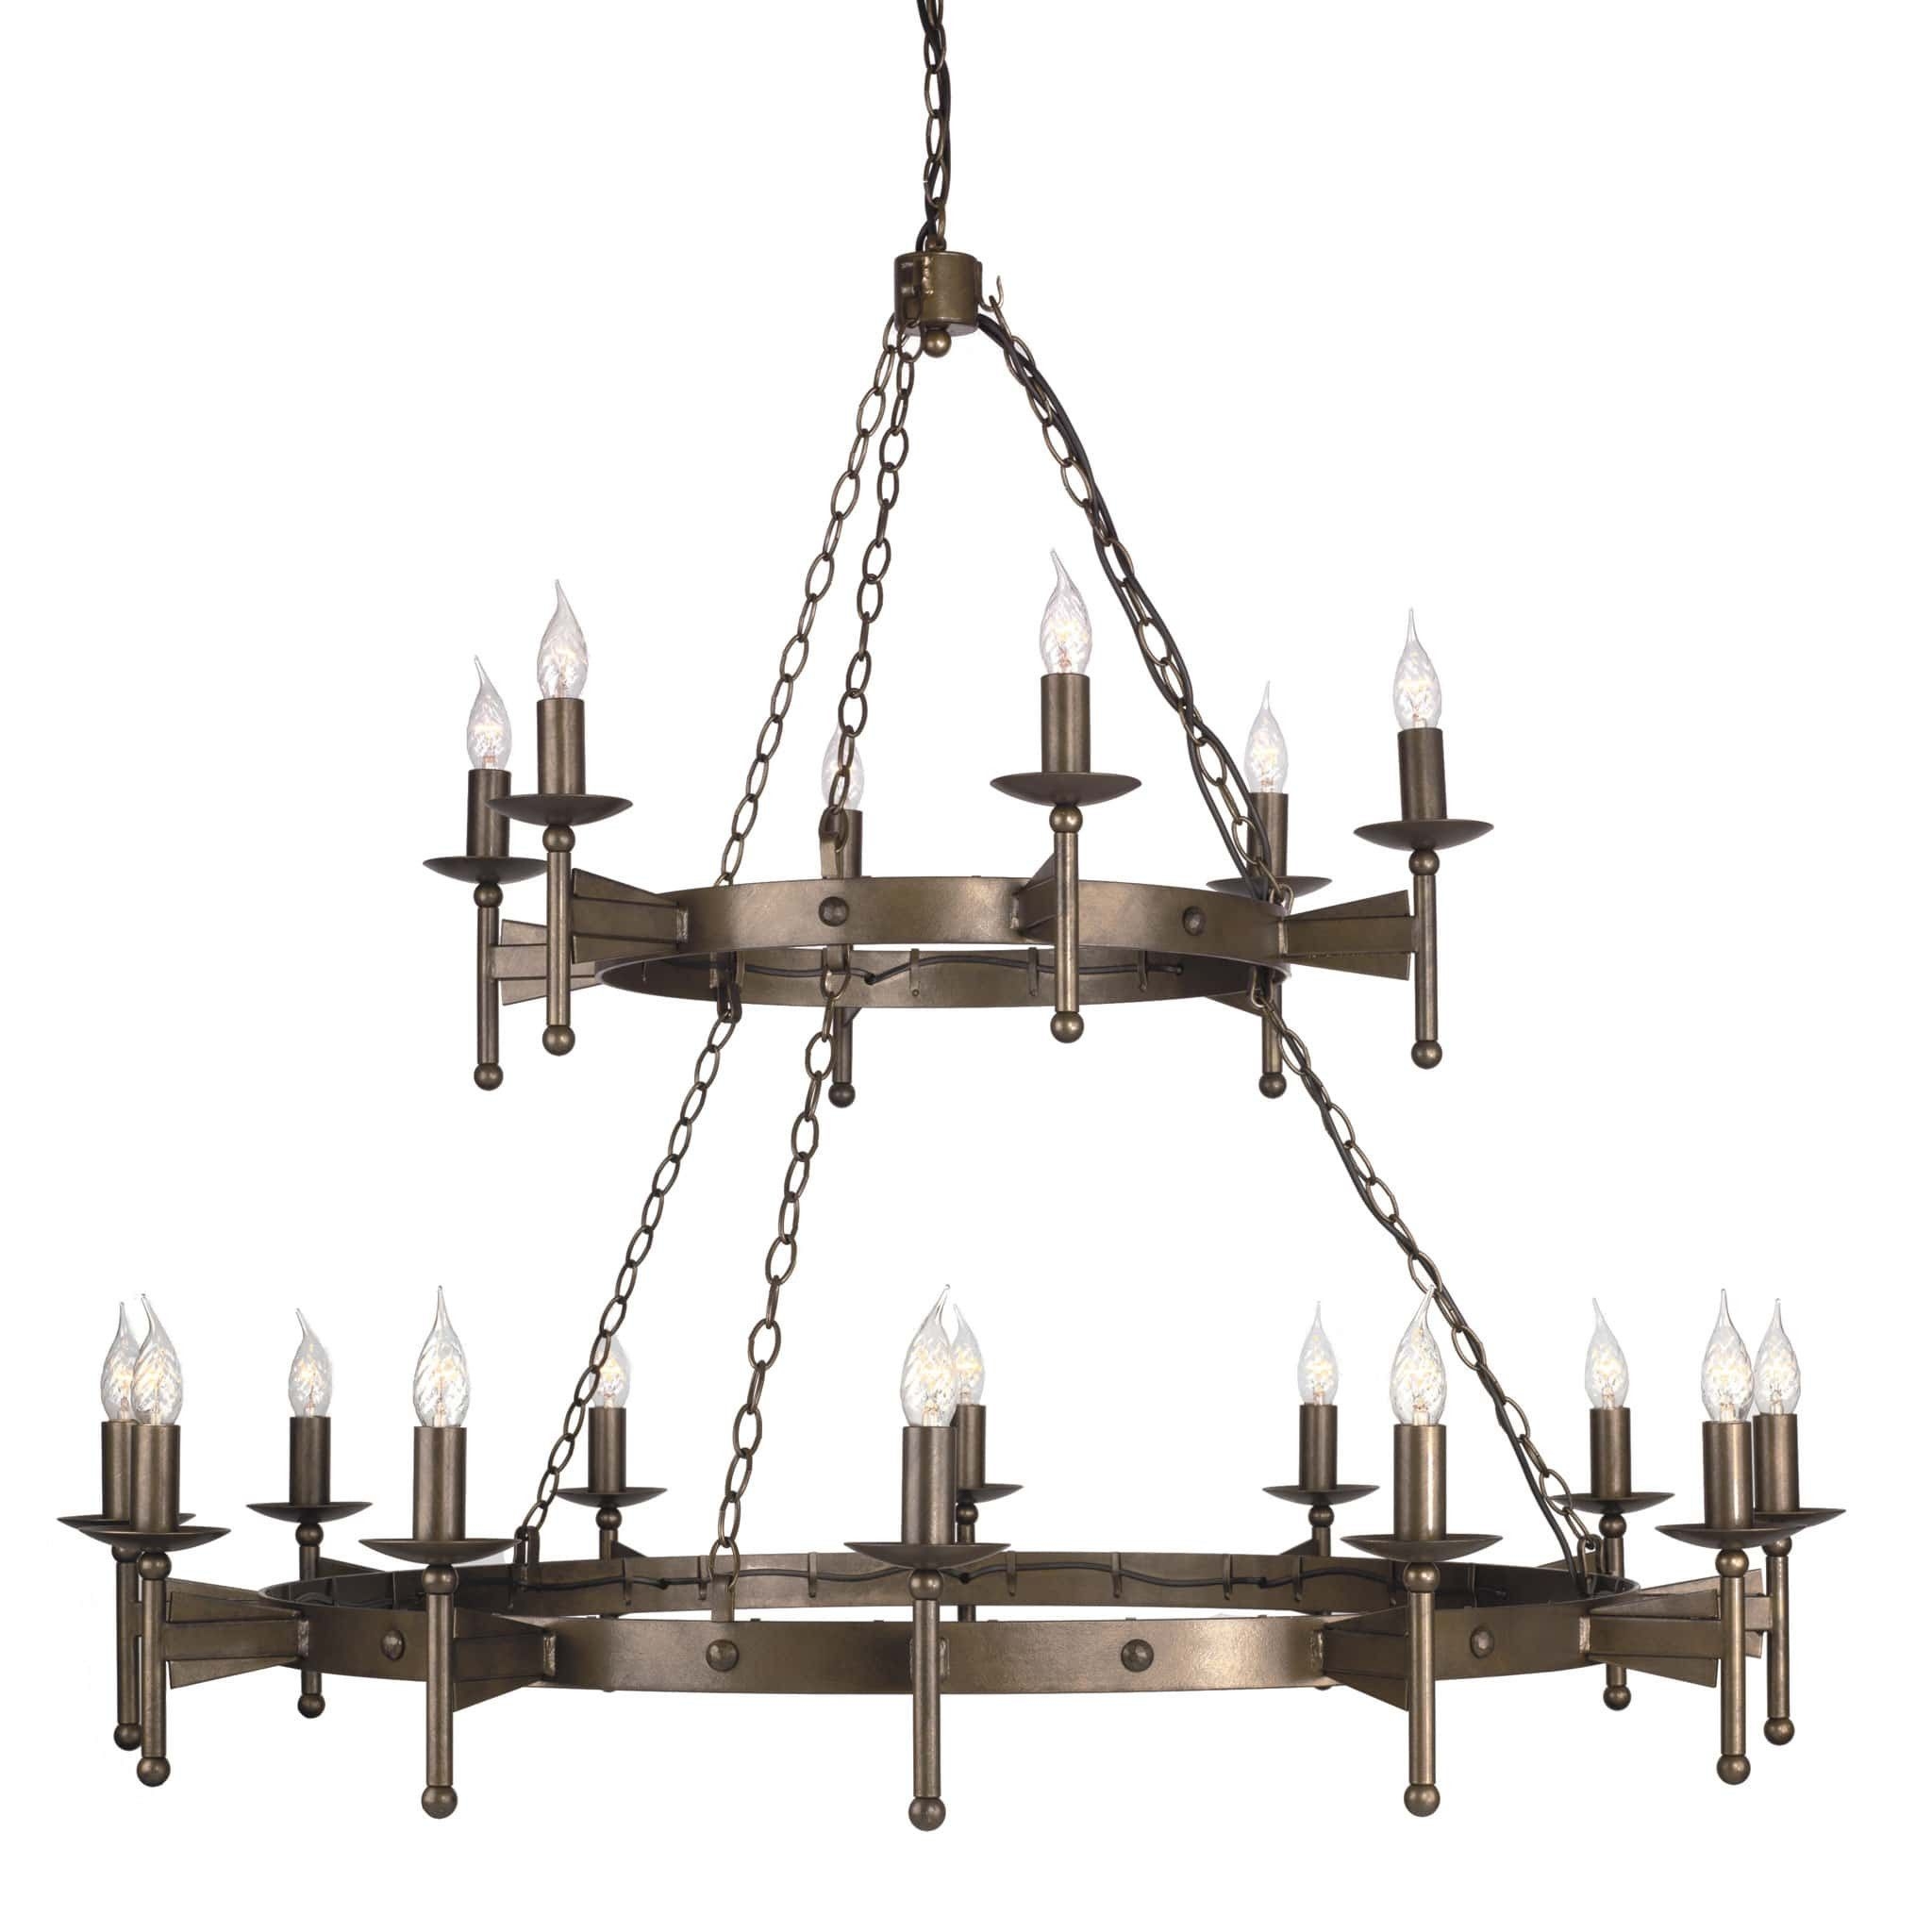 Medieval chandelier 52